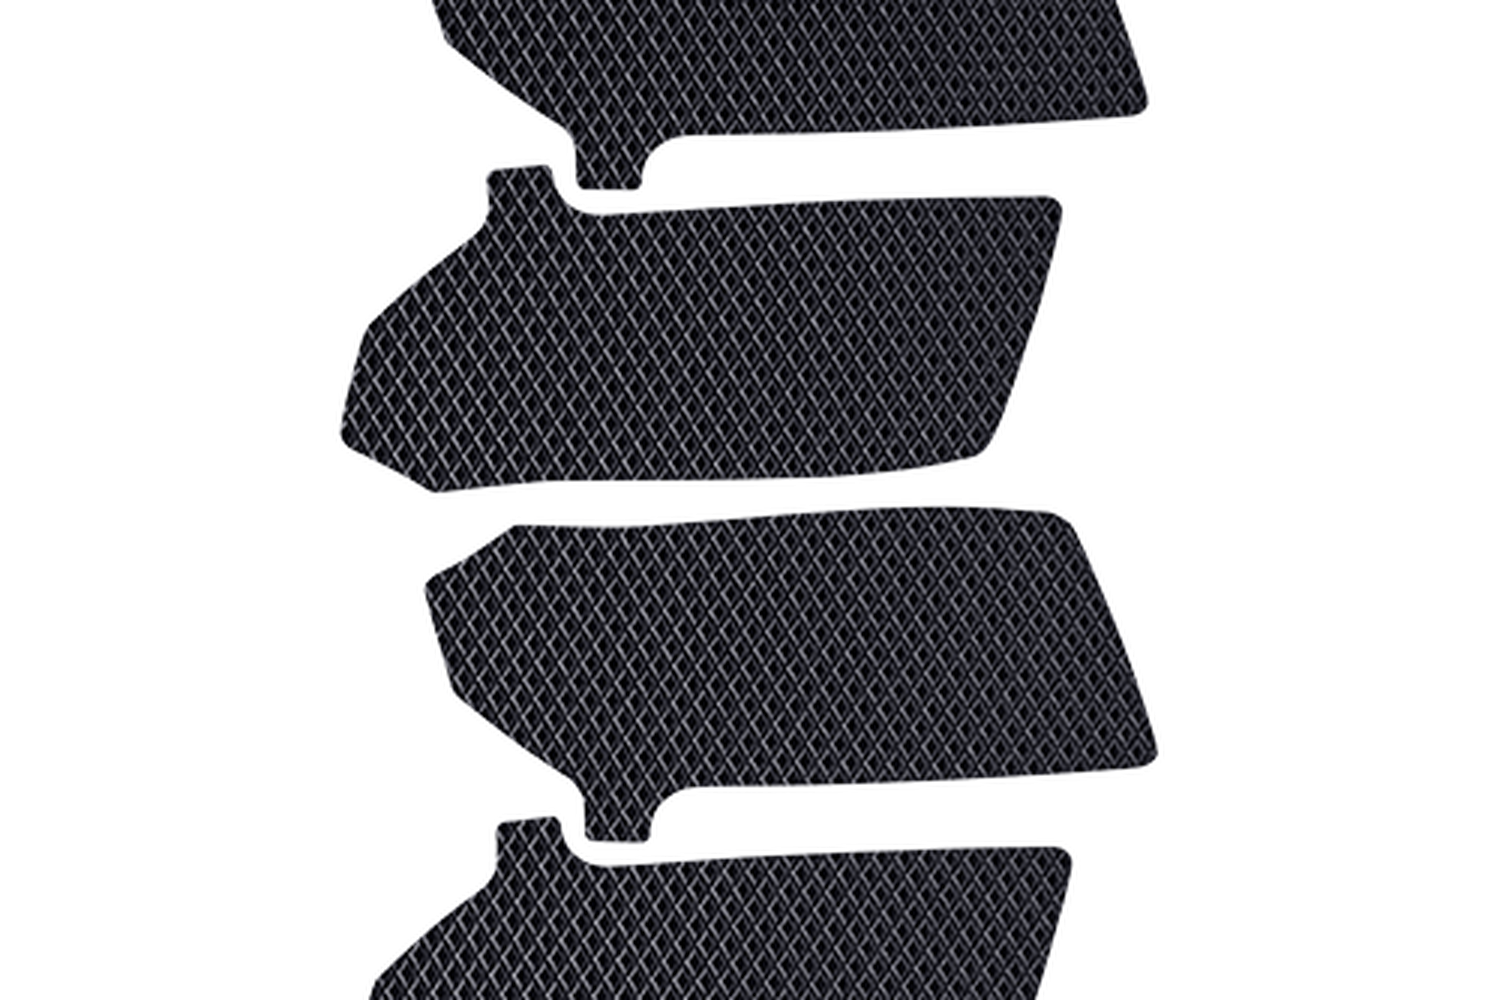 BT.L mouse grip tape for Razer Viper or Viper Mini – X-raypad